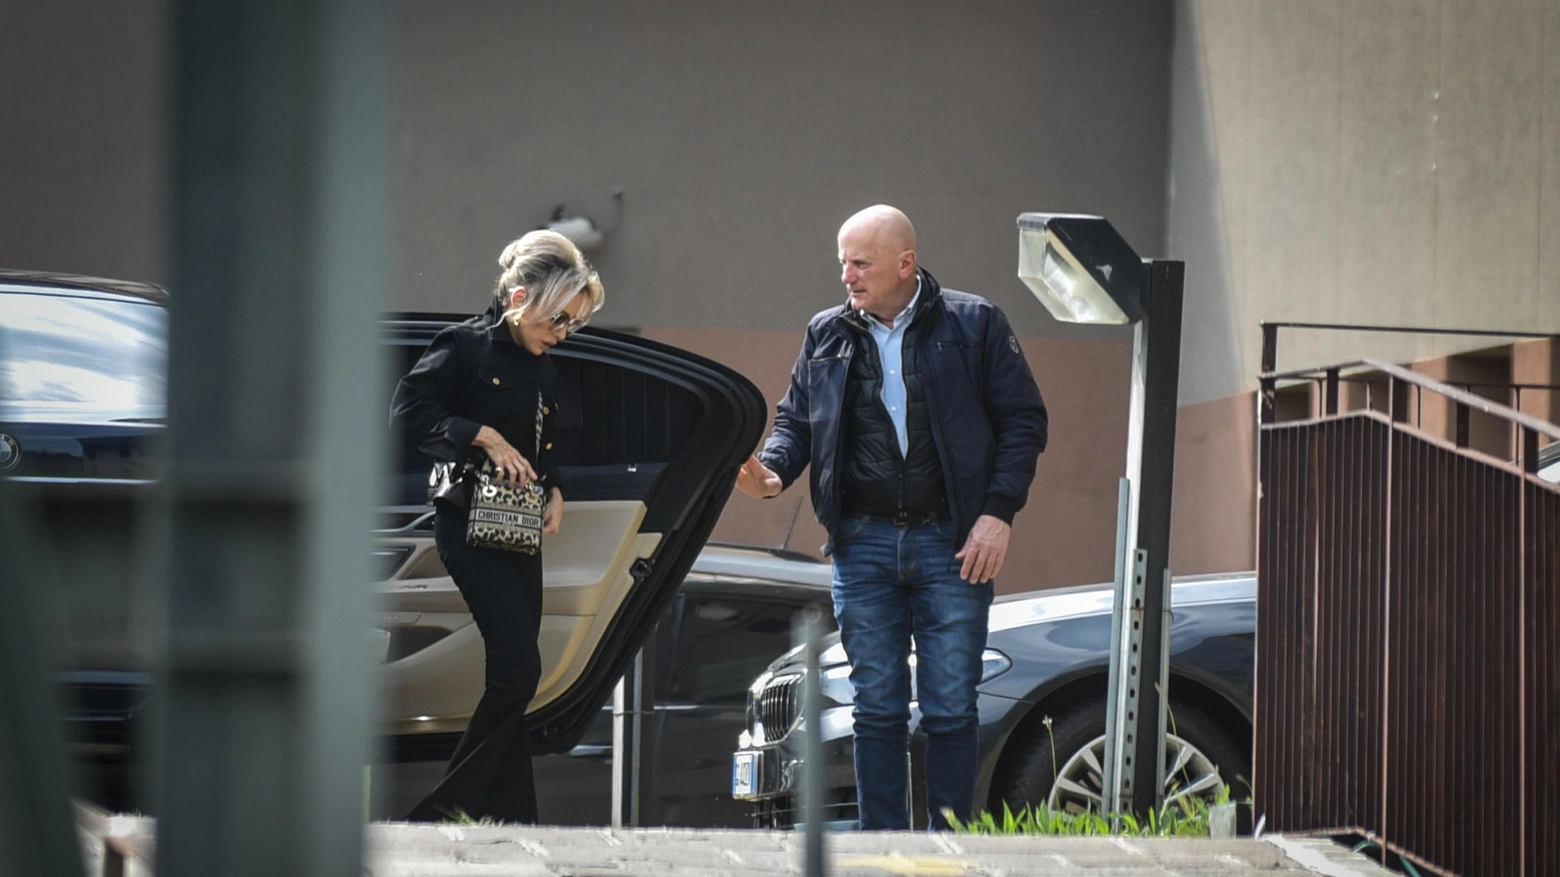 Marina Barlusconi arriva all’ospedale San Raffaele